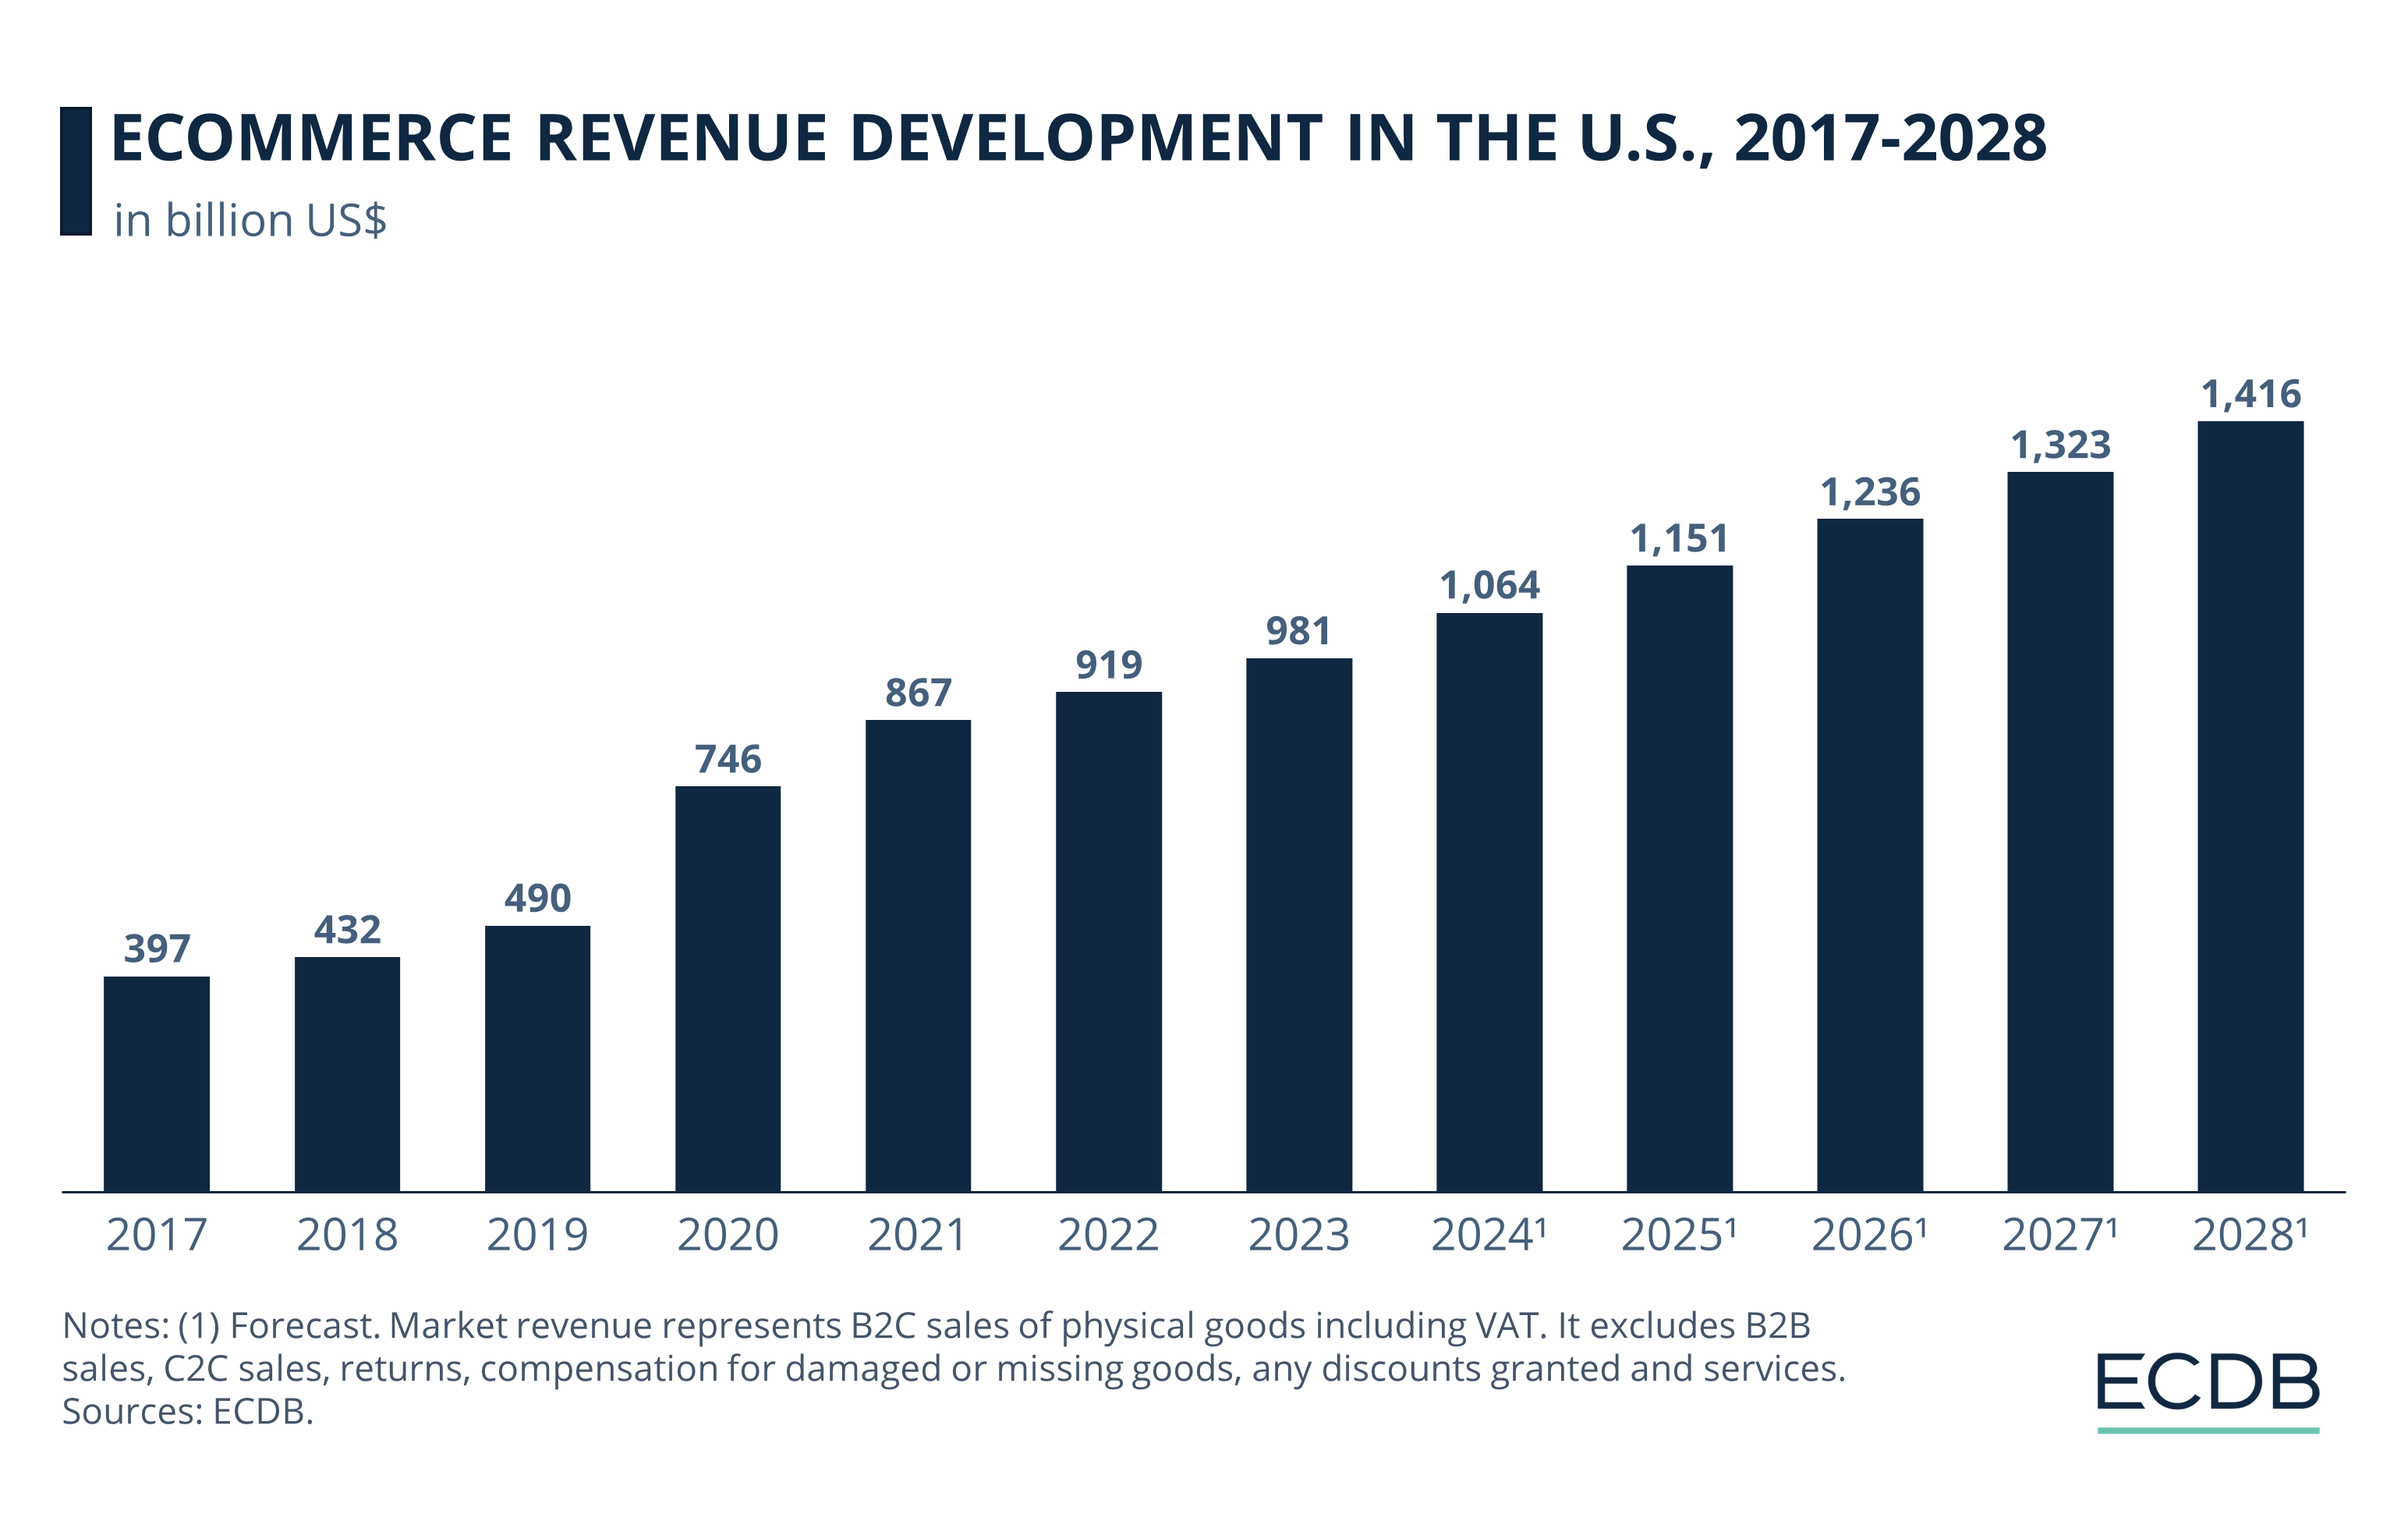 eCommerce Revenue Development in the U.S., 2017-2028